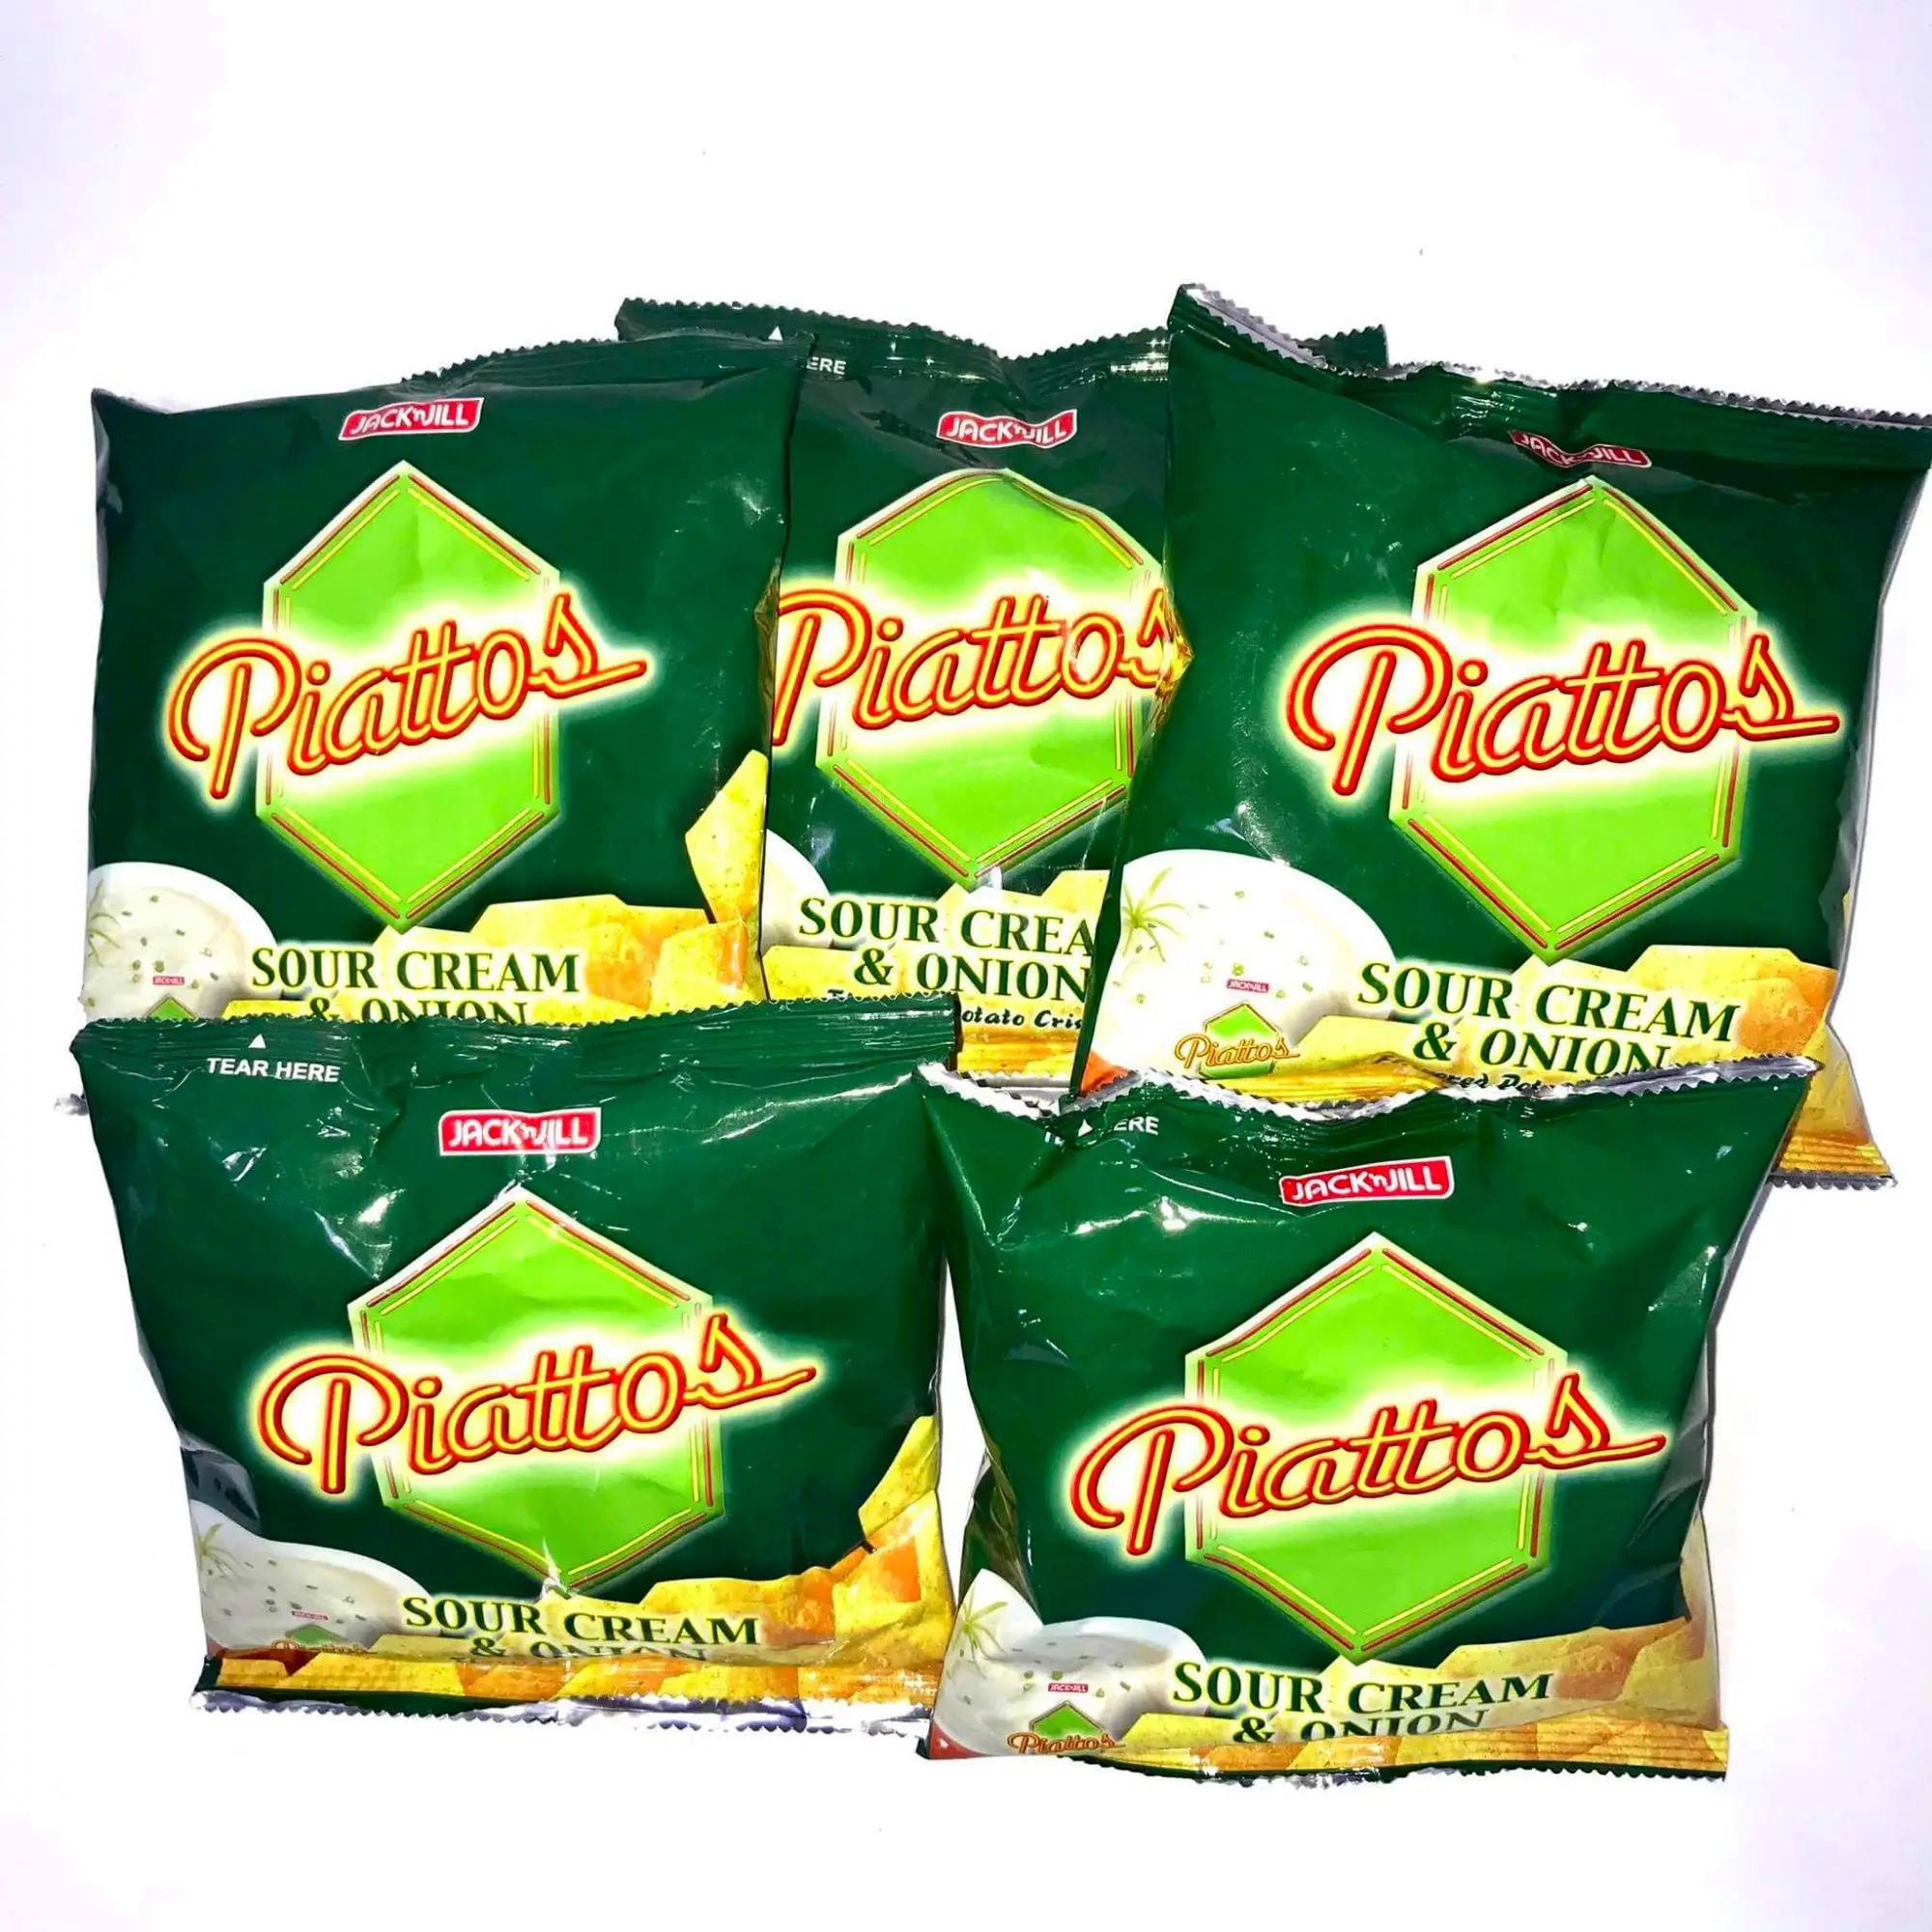 5 Packs of Piattos Sour Cream and Onion (40g)